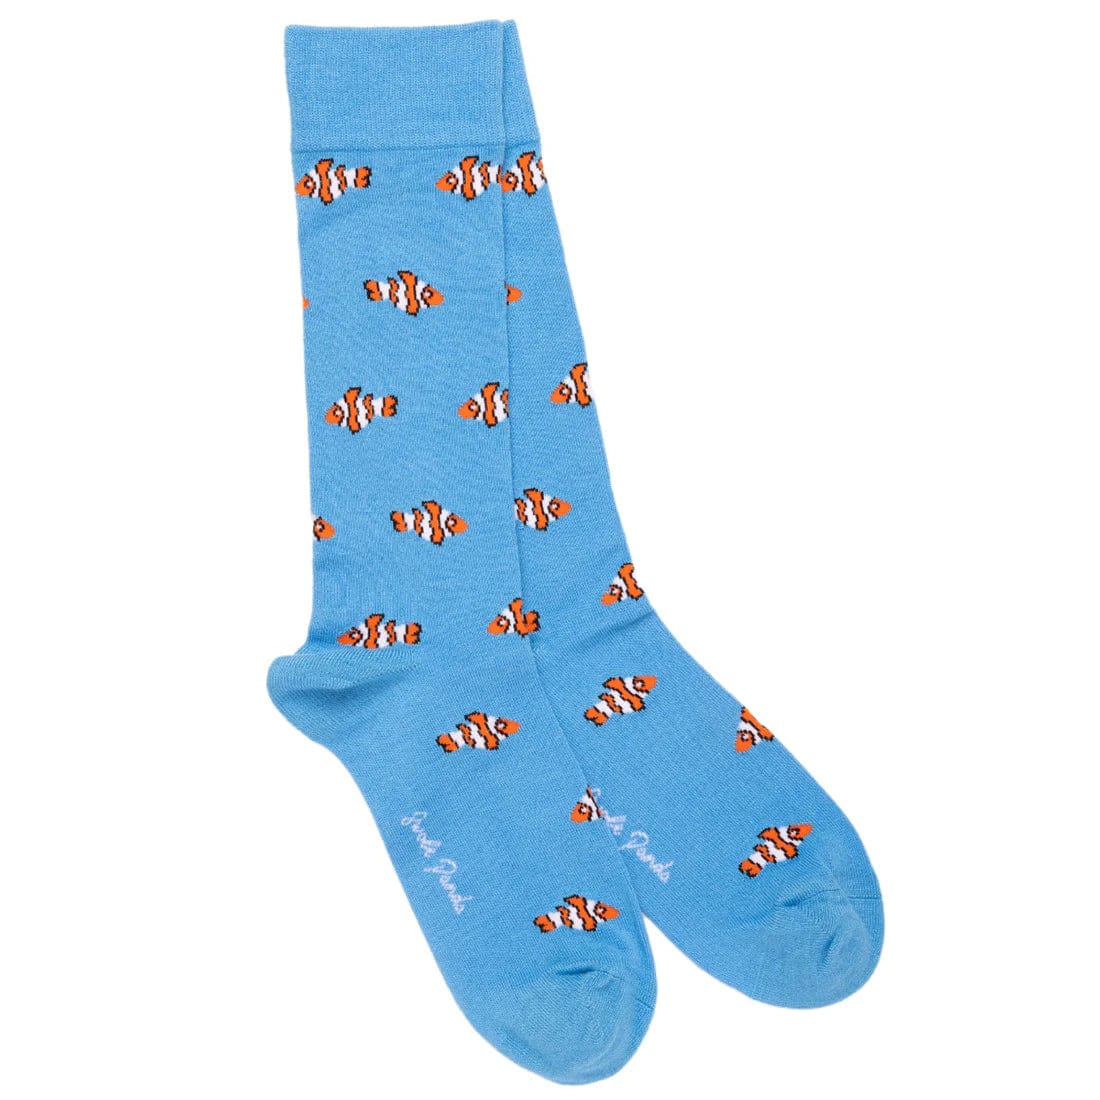 Swole Panda Clown Fish Socks in Blue